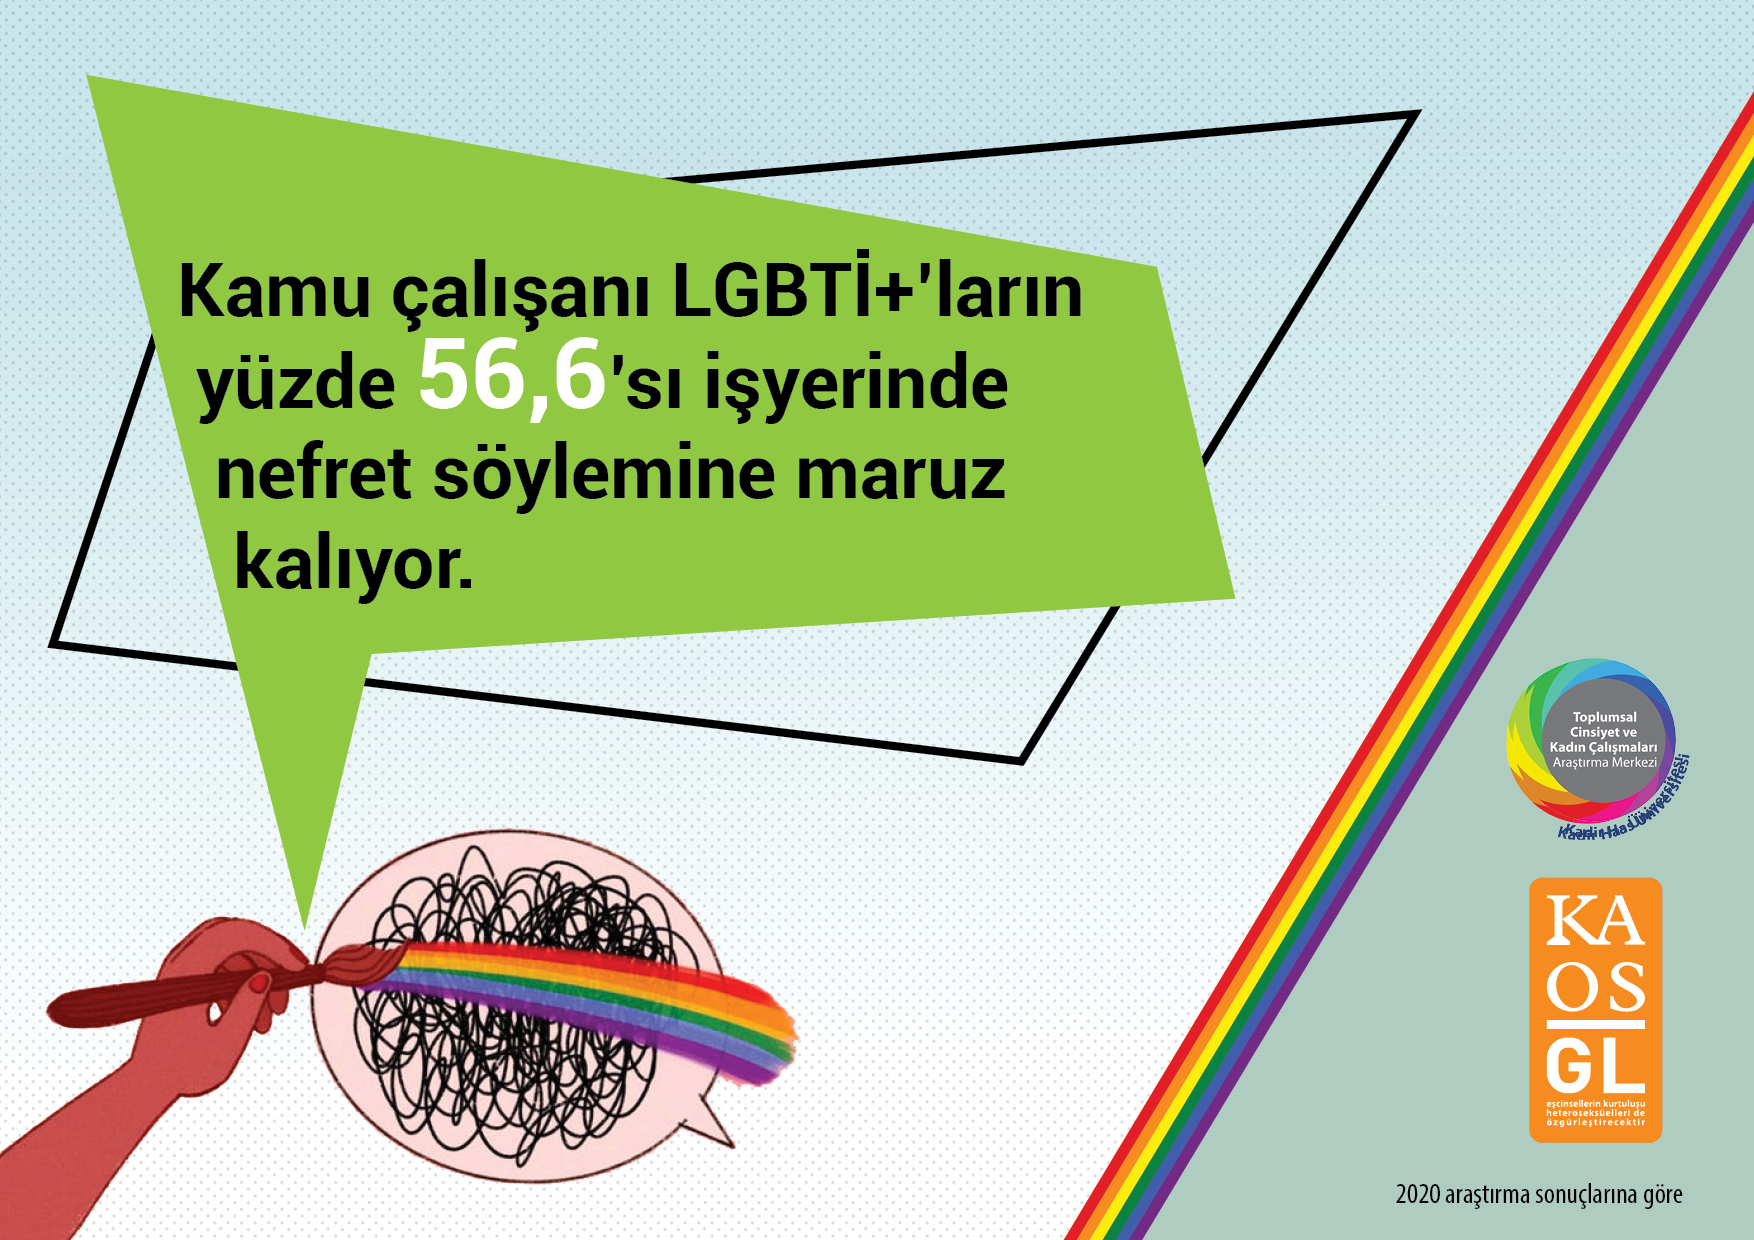 “LGBTİ+’lara nefret söylemi kamuda ağır bir tablo yaratıyor” | Kaos GL - LGBTİ+ Haber Portalı